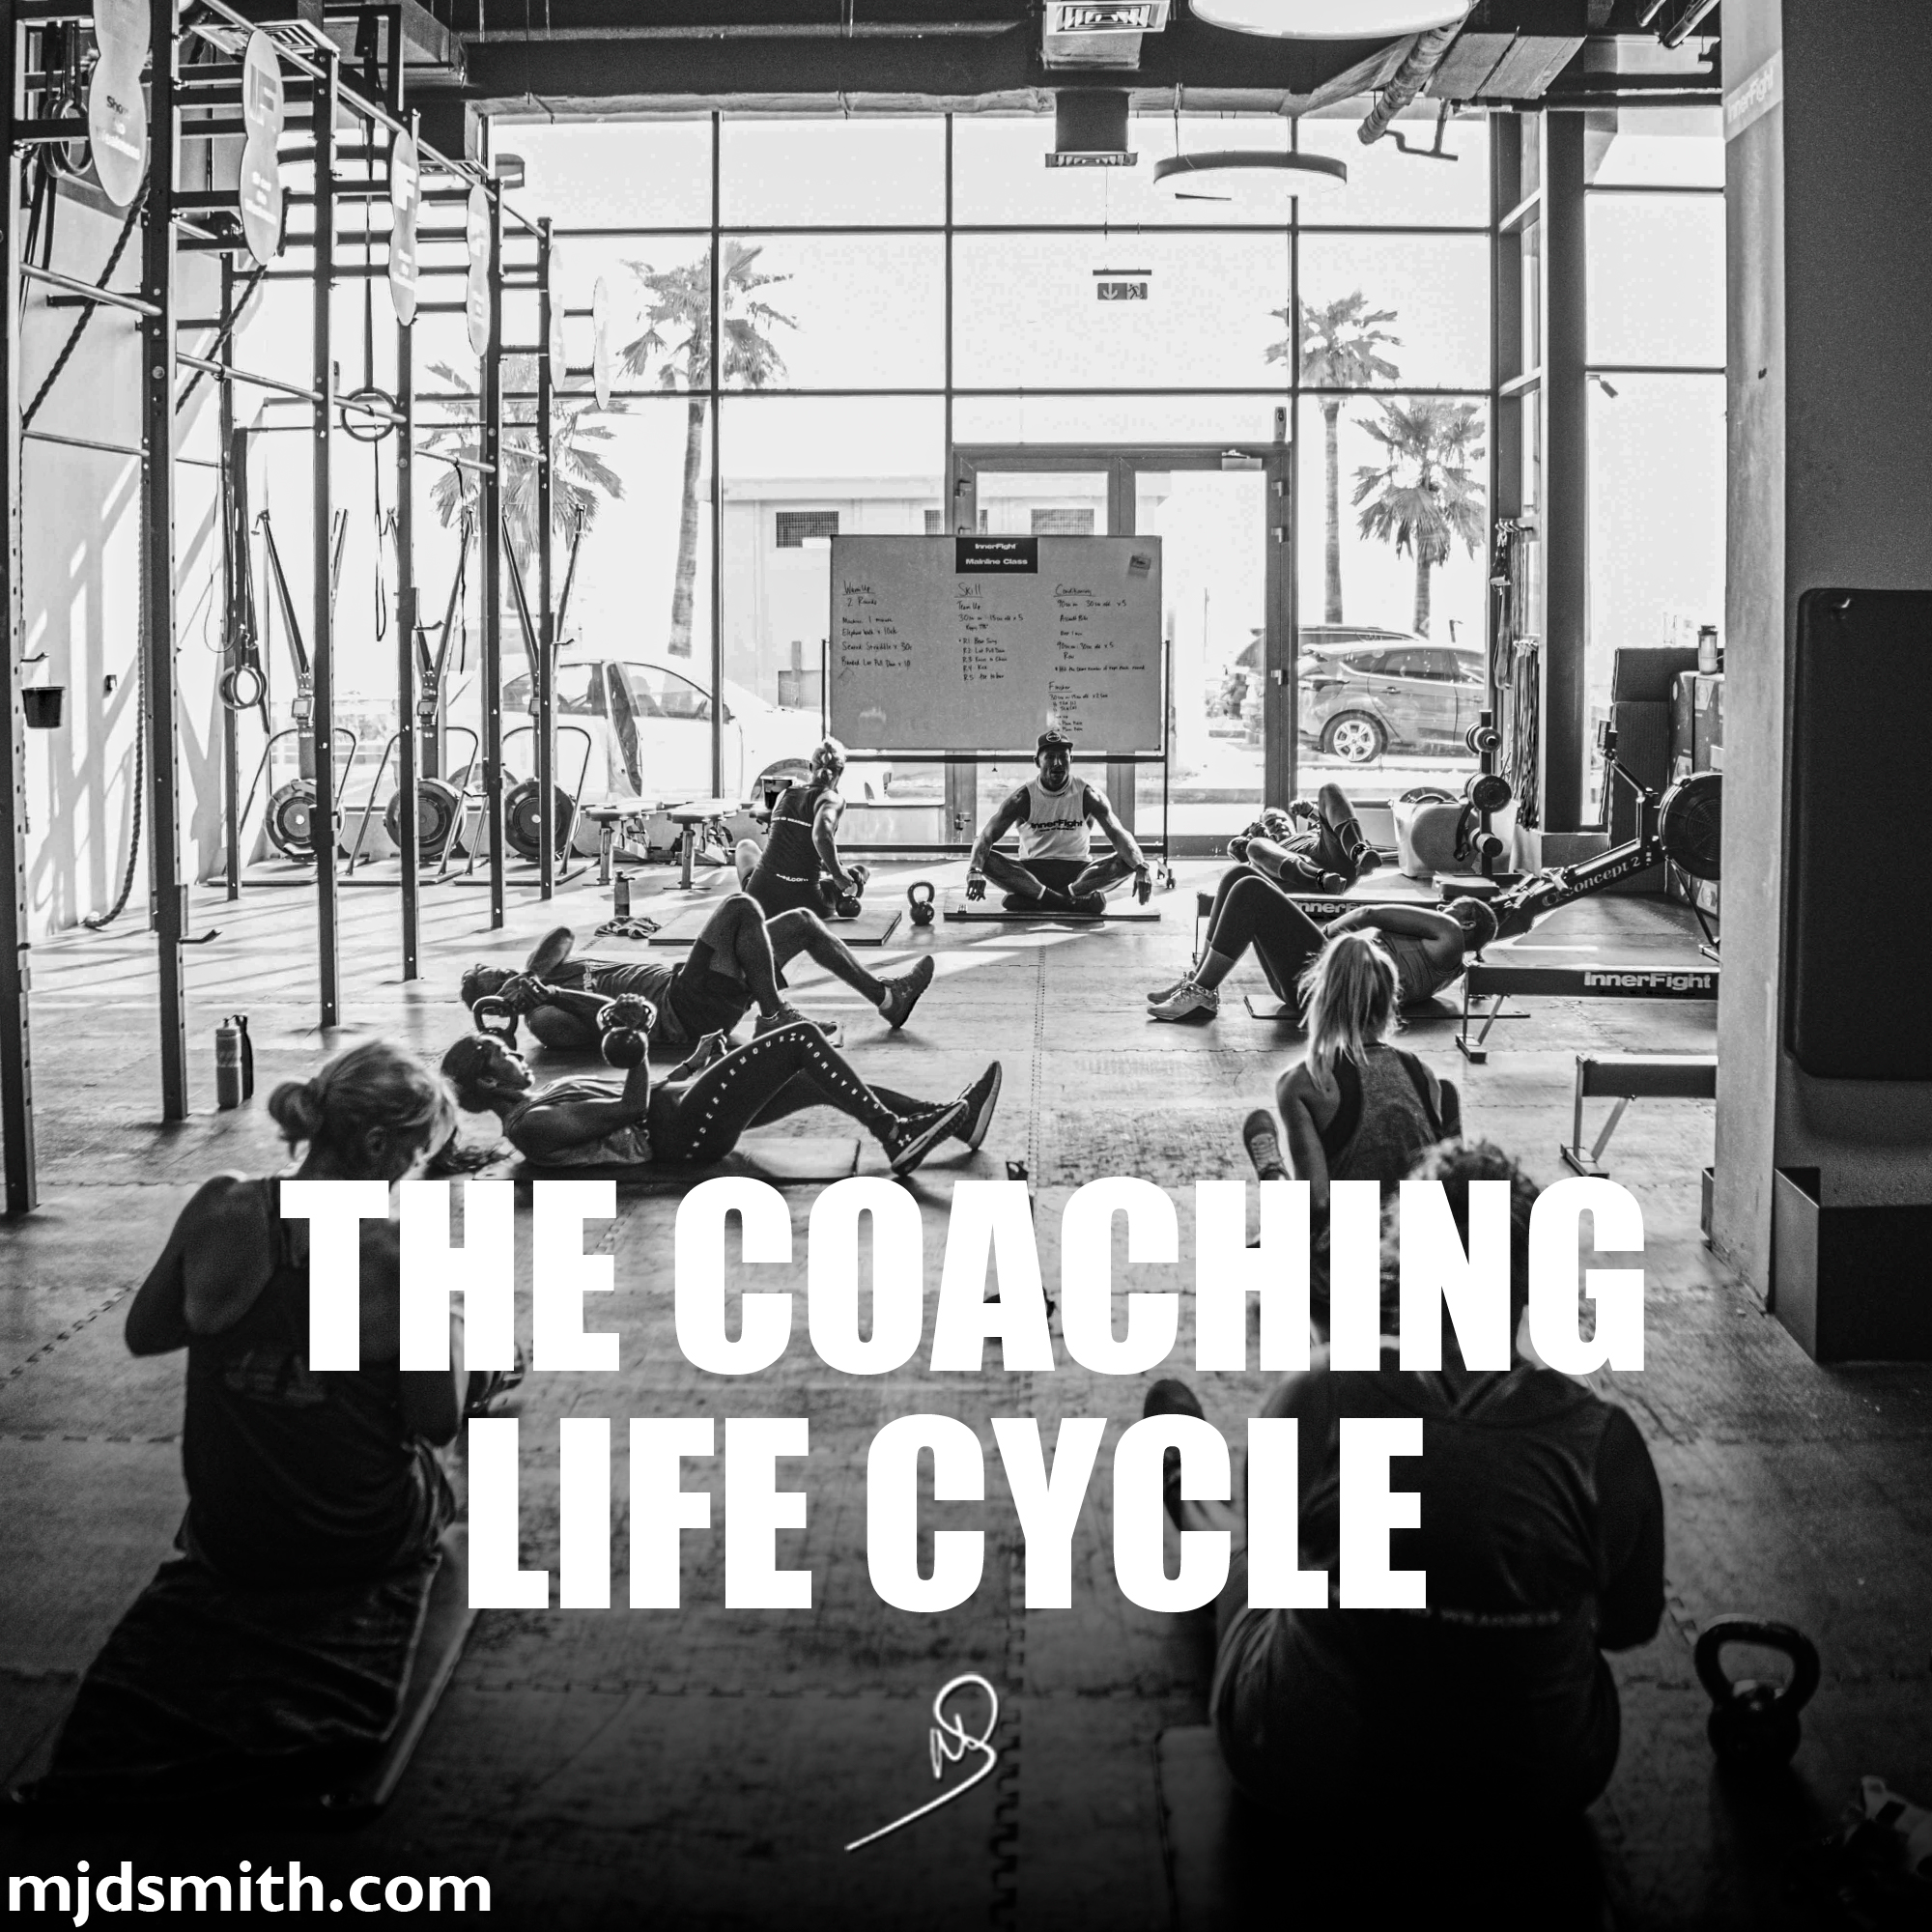 The coaching cycle